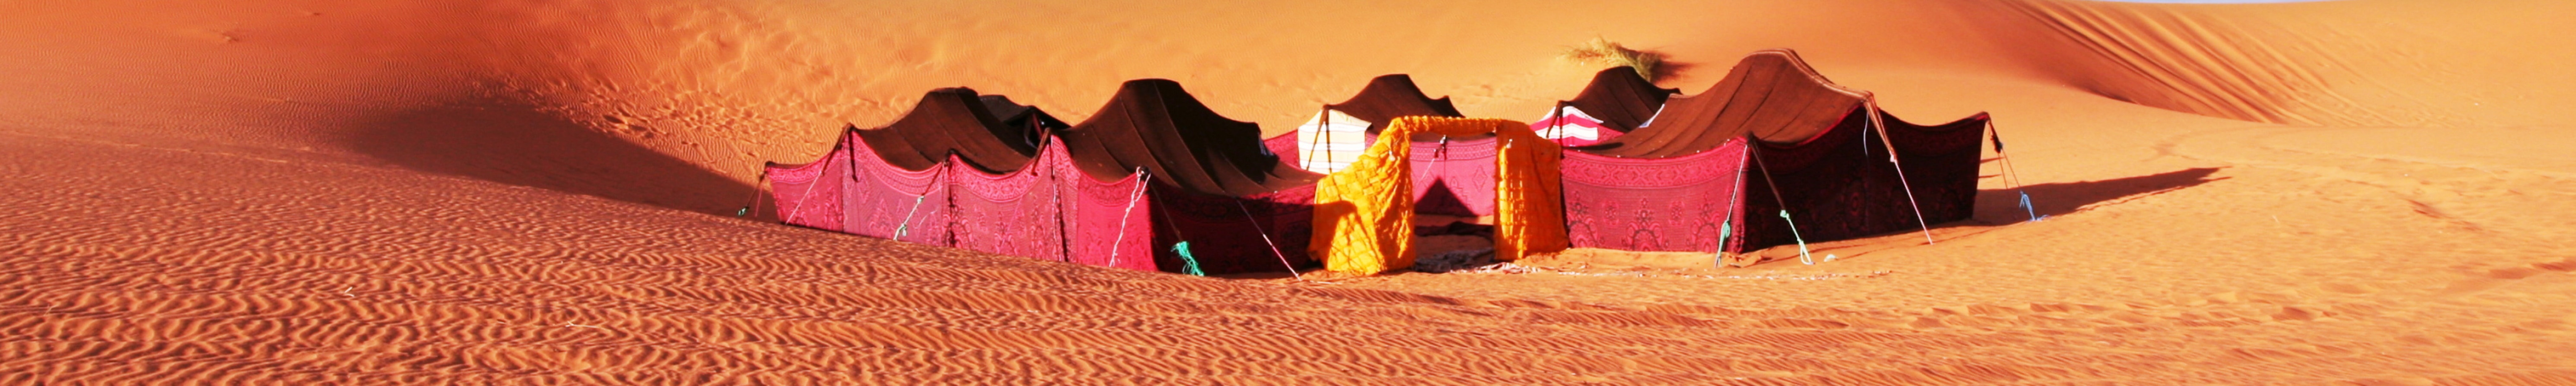 Ørkencamp i Sahara